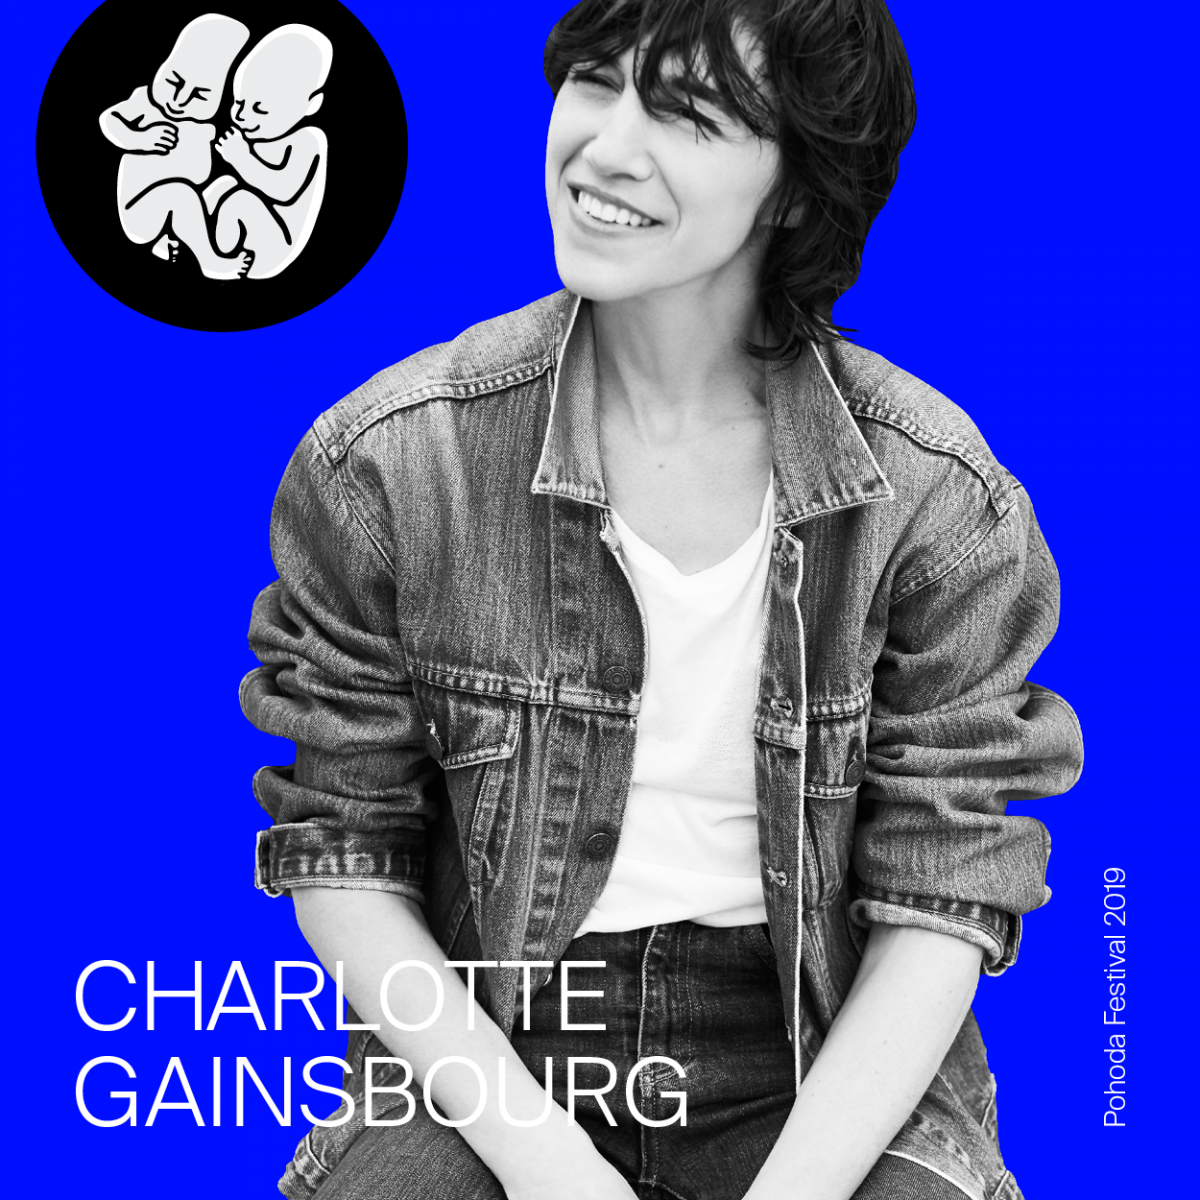 Charlotte Gainsbourg